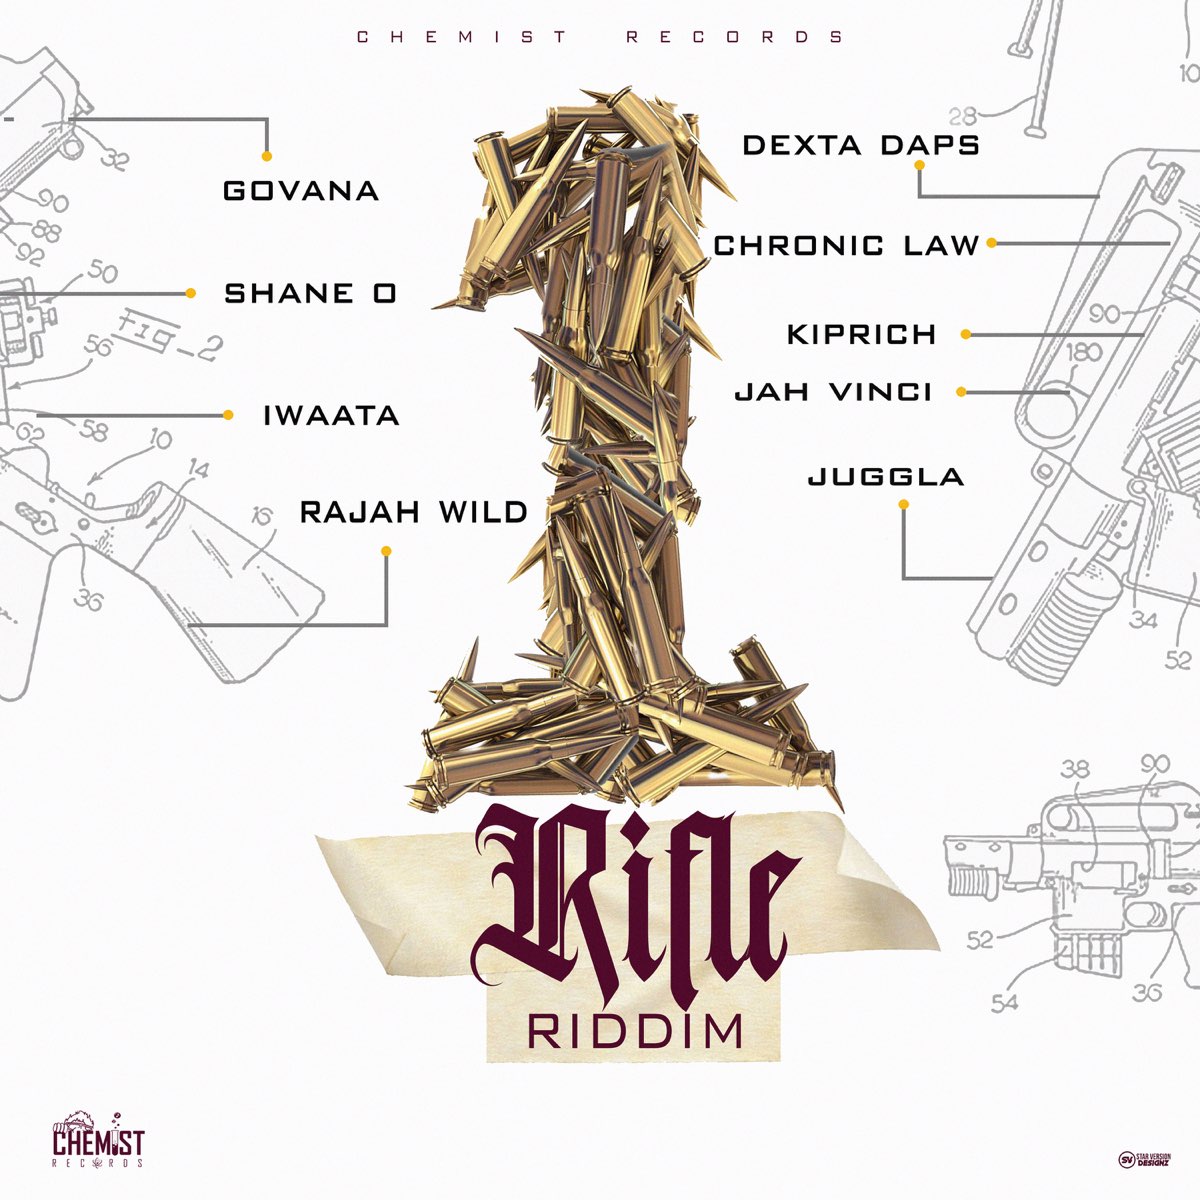 Arab Riddim - Single - Album by Biggi & Jurab - Apple Music